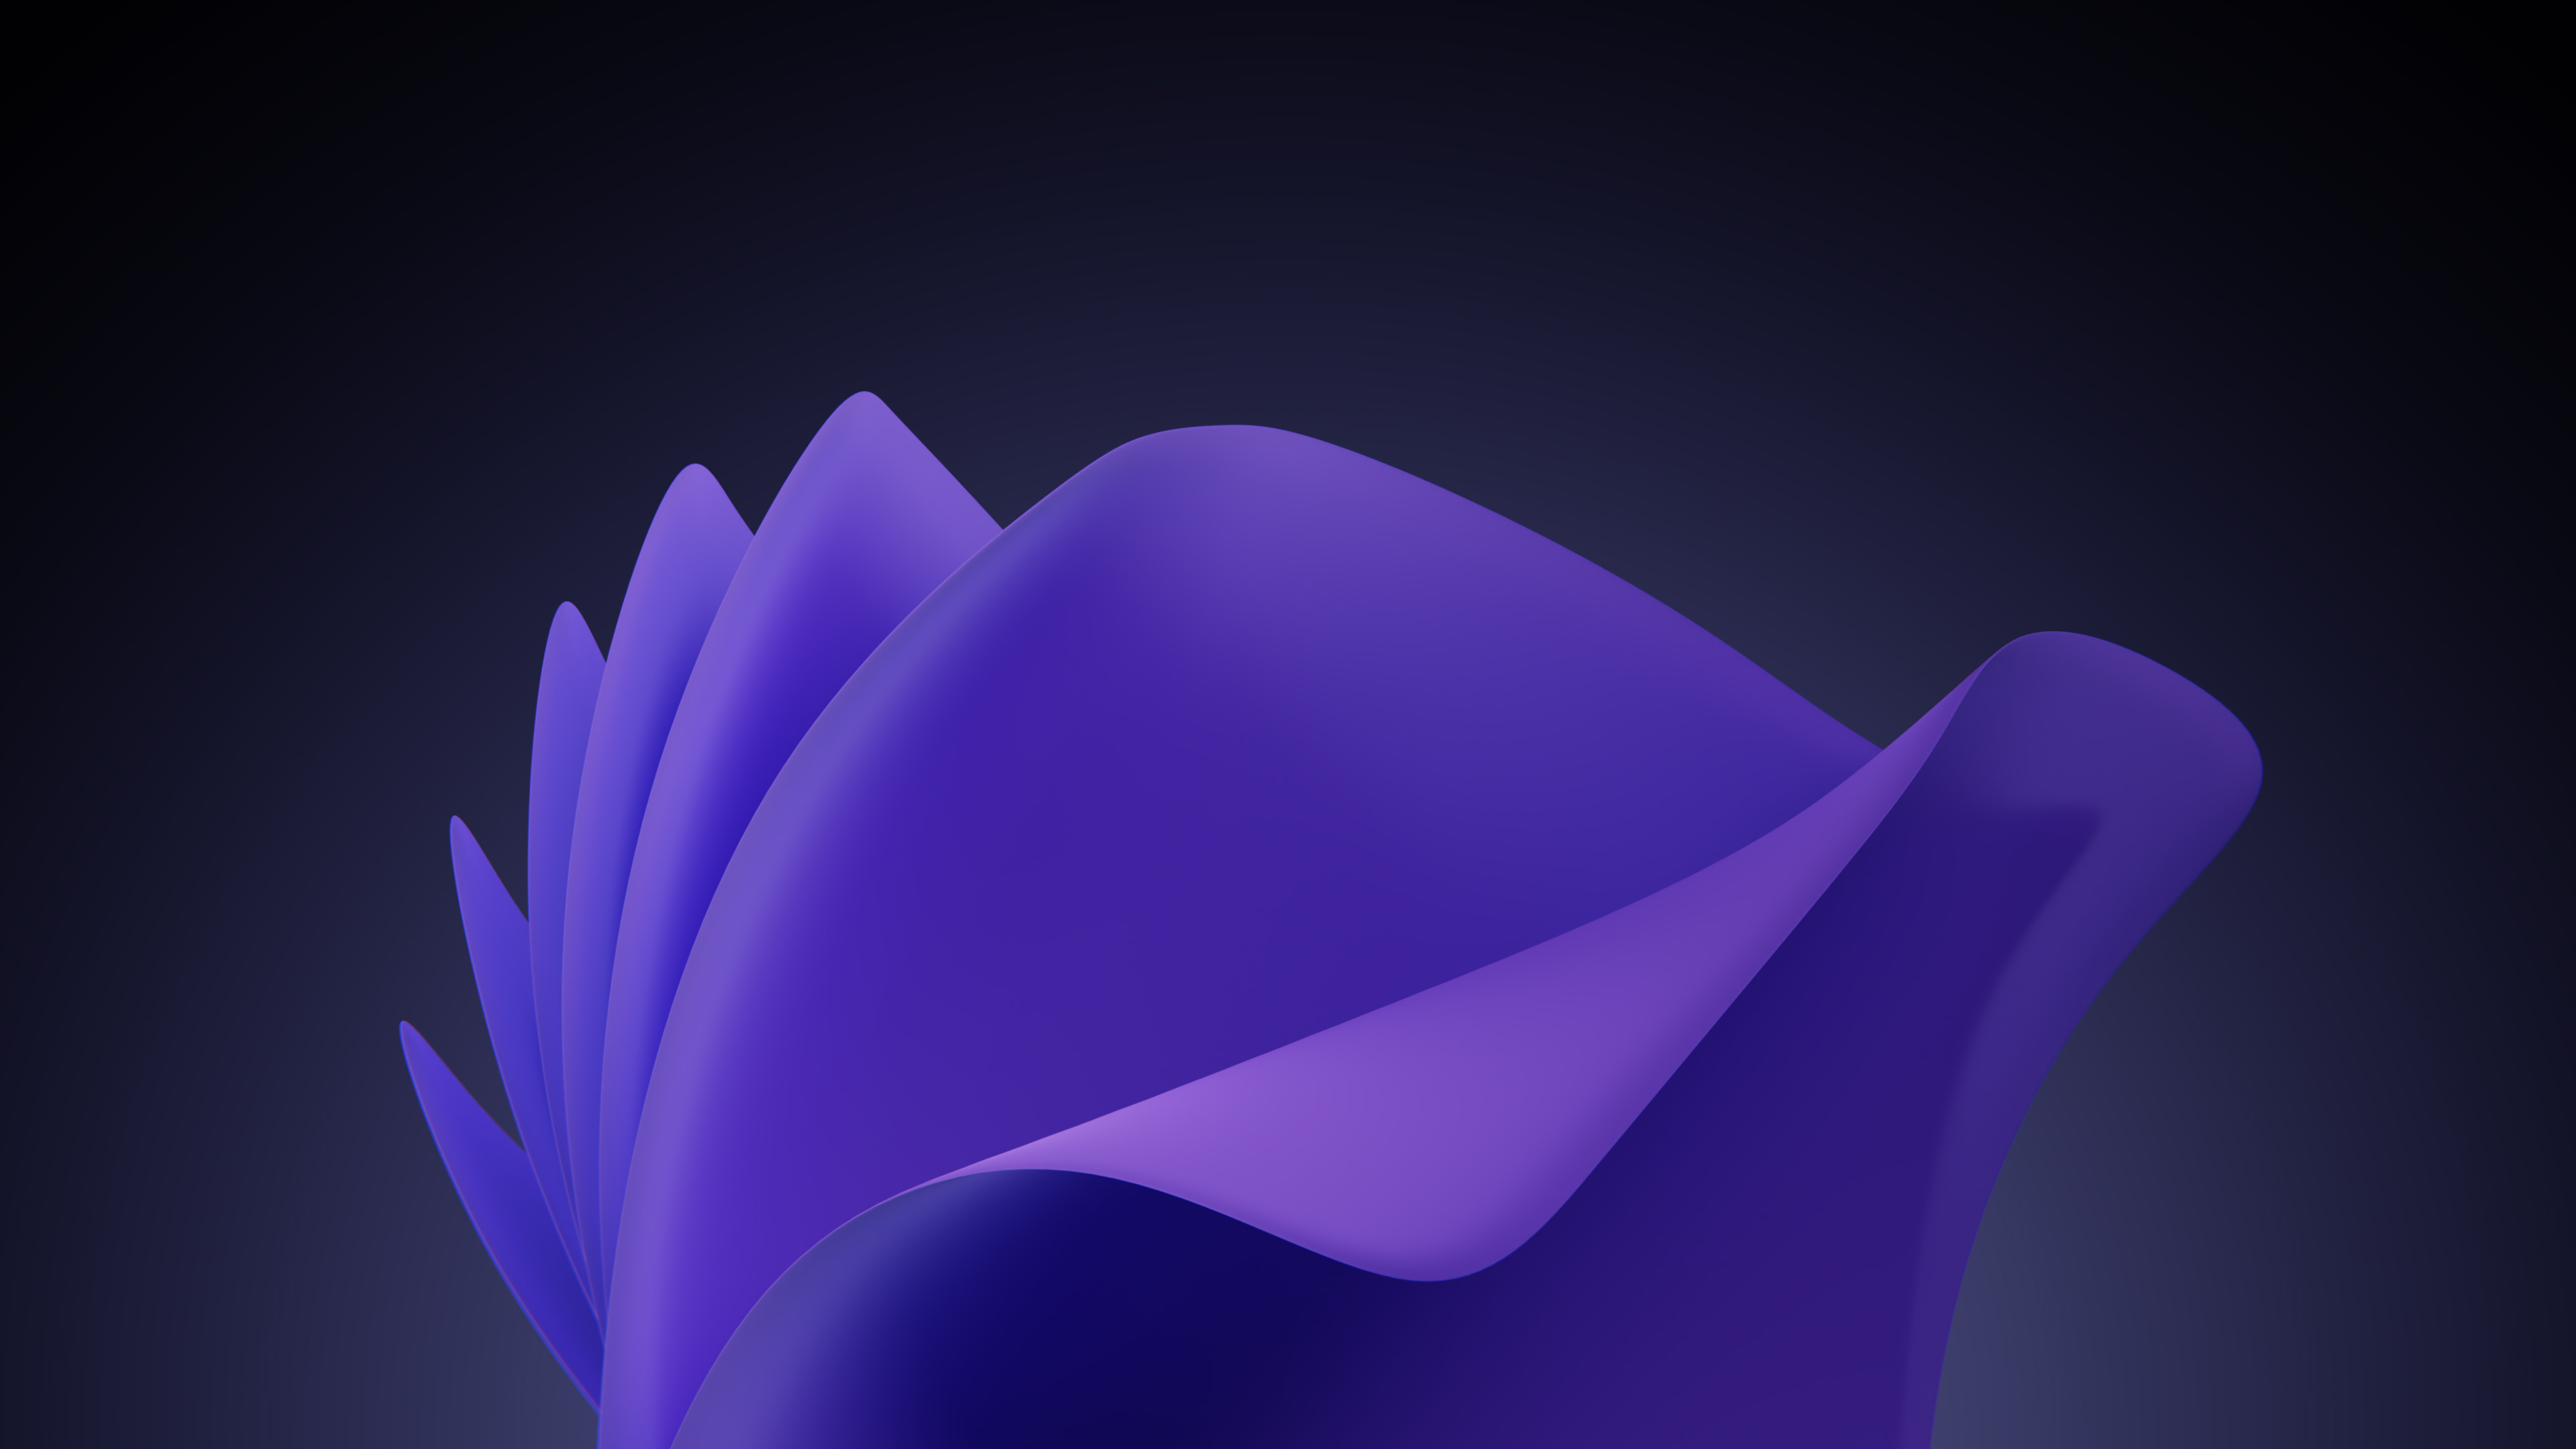 General 3840x2160 abstract digital art minimalism Windows 11 dark background violet (color) simple background